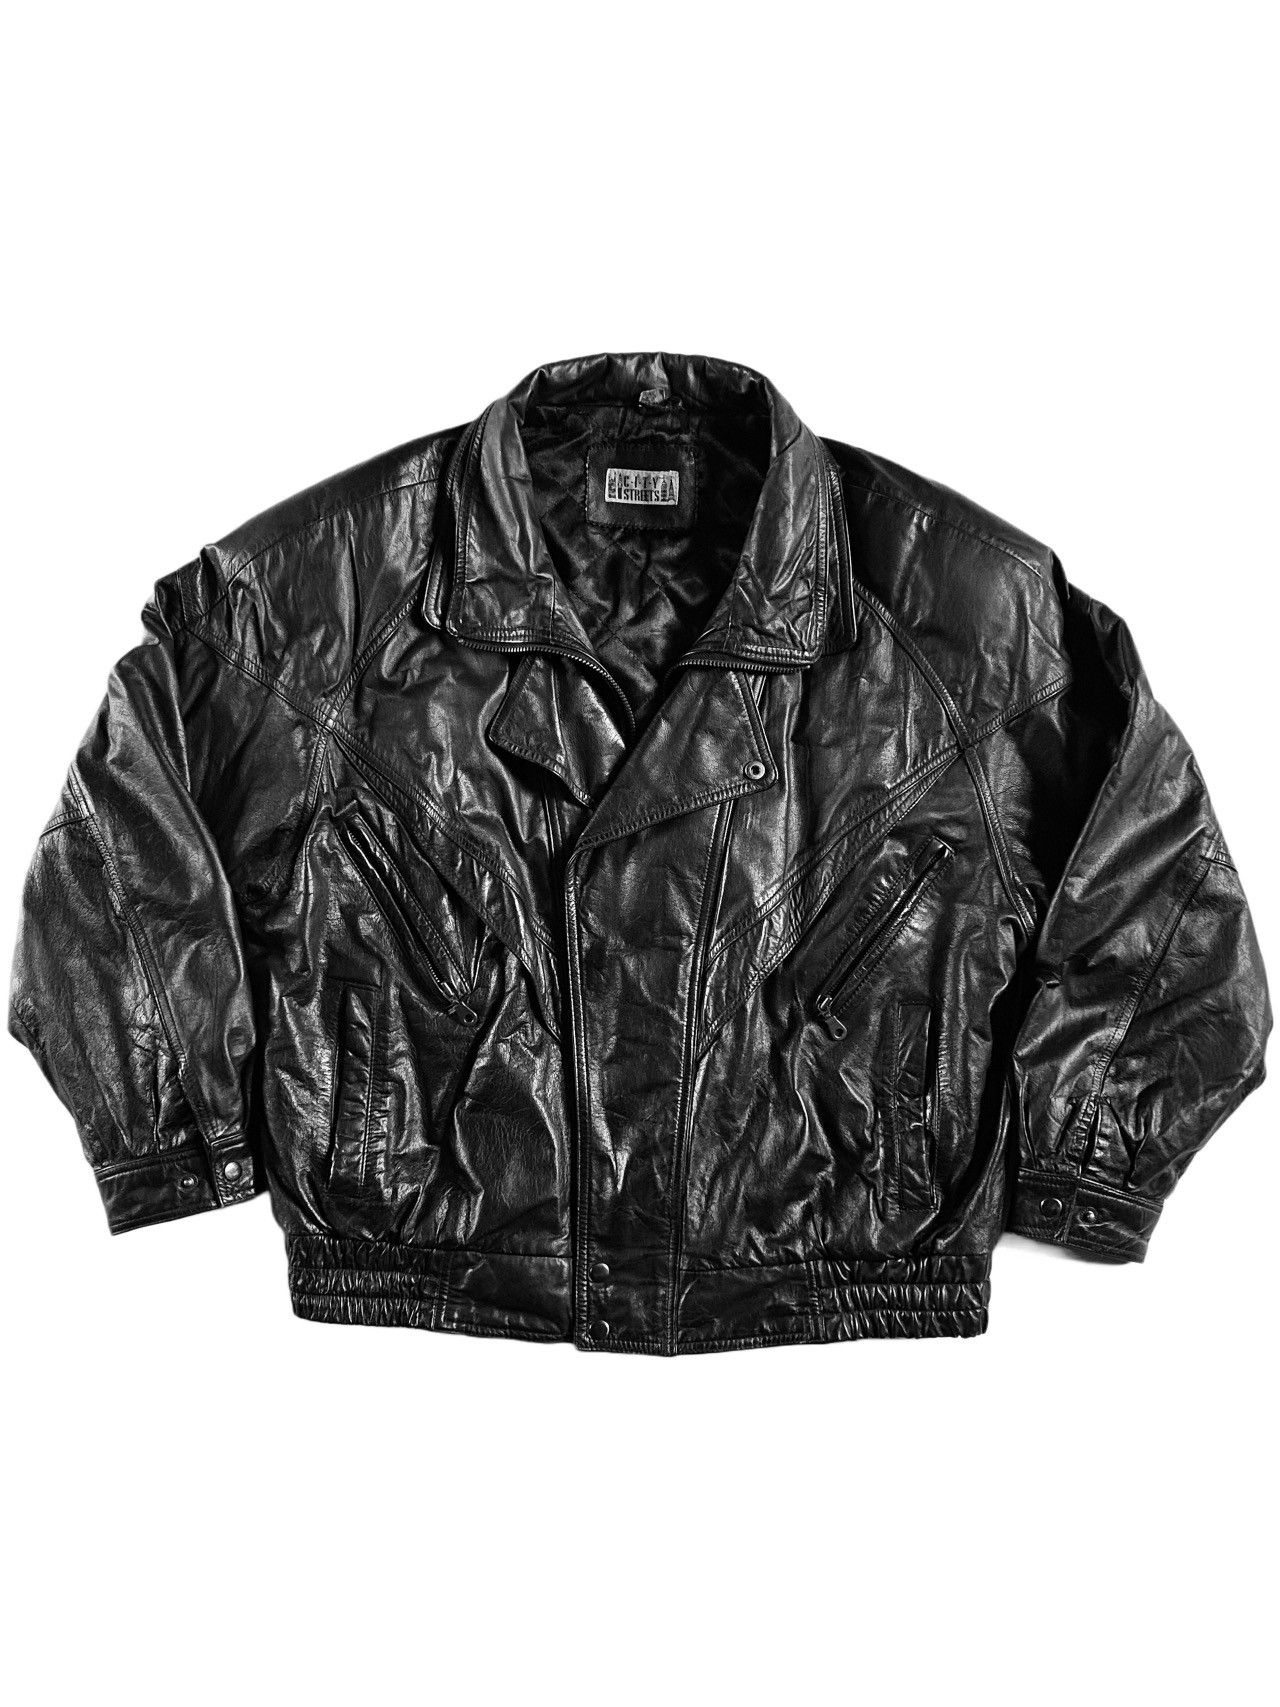 Vintage Vintage 90s Black Leather Jacket boxy fit Made in Korea | Grailed